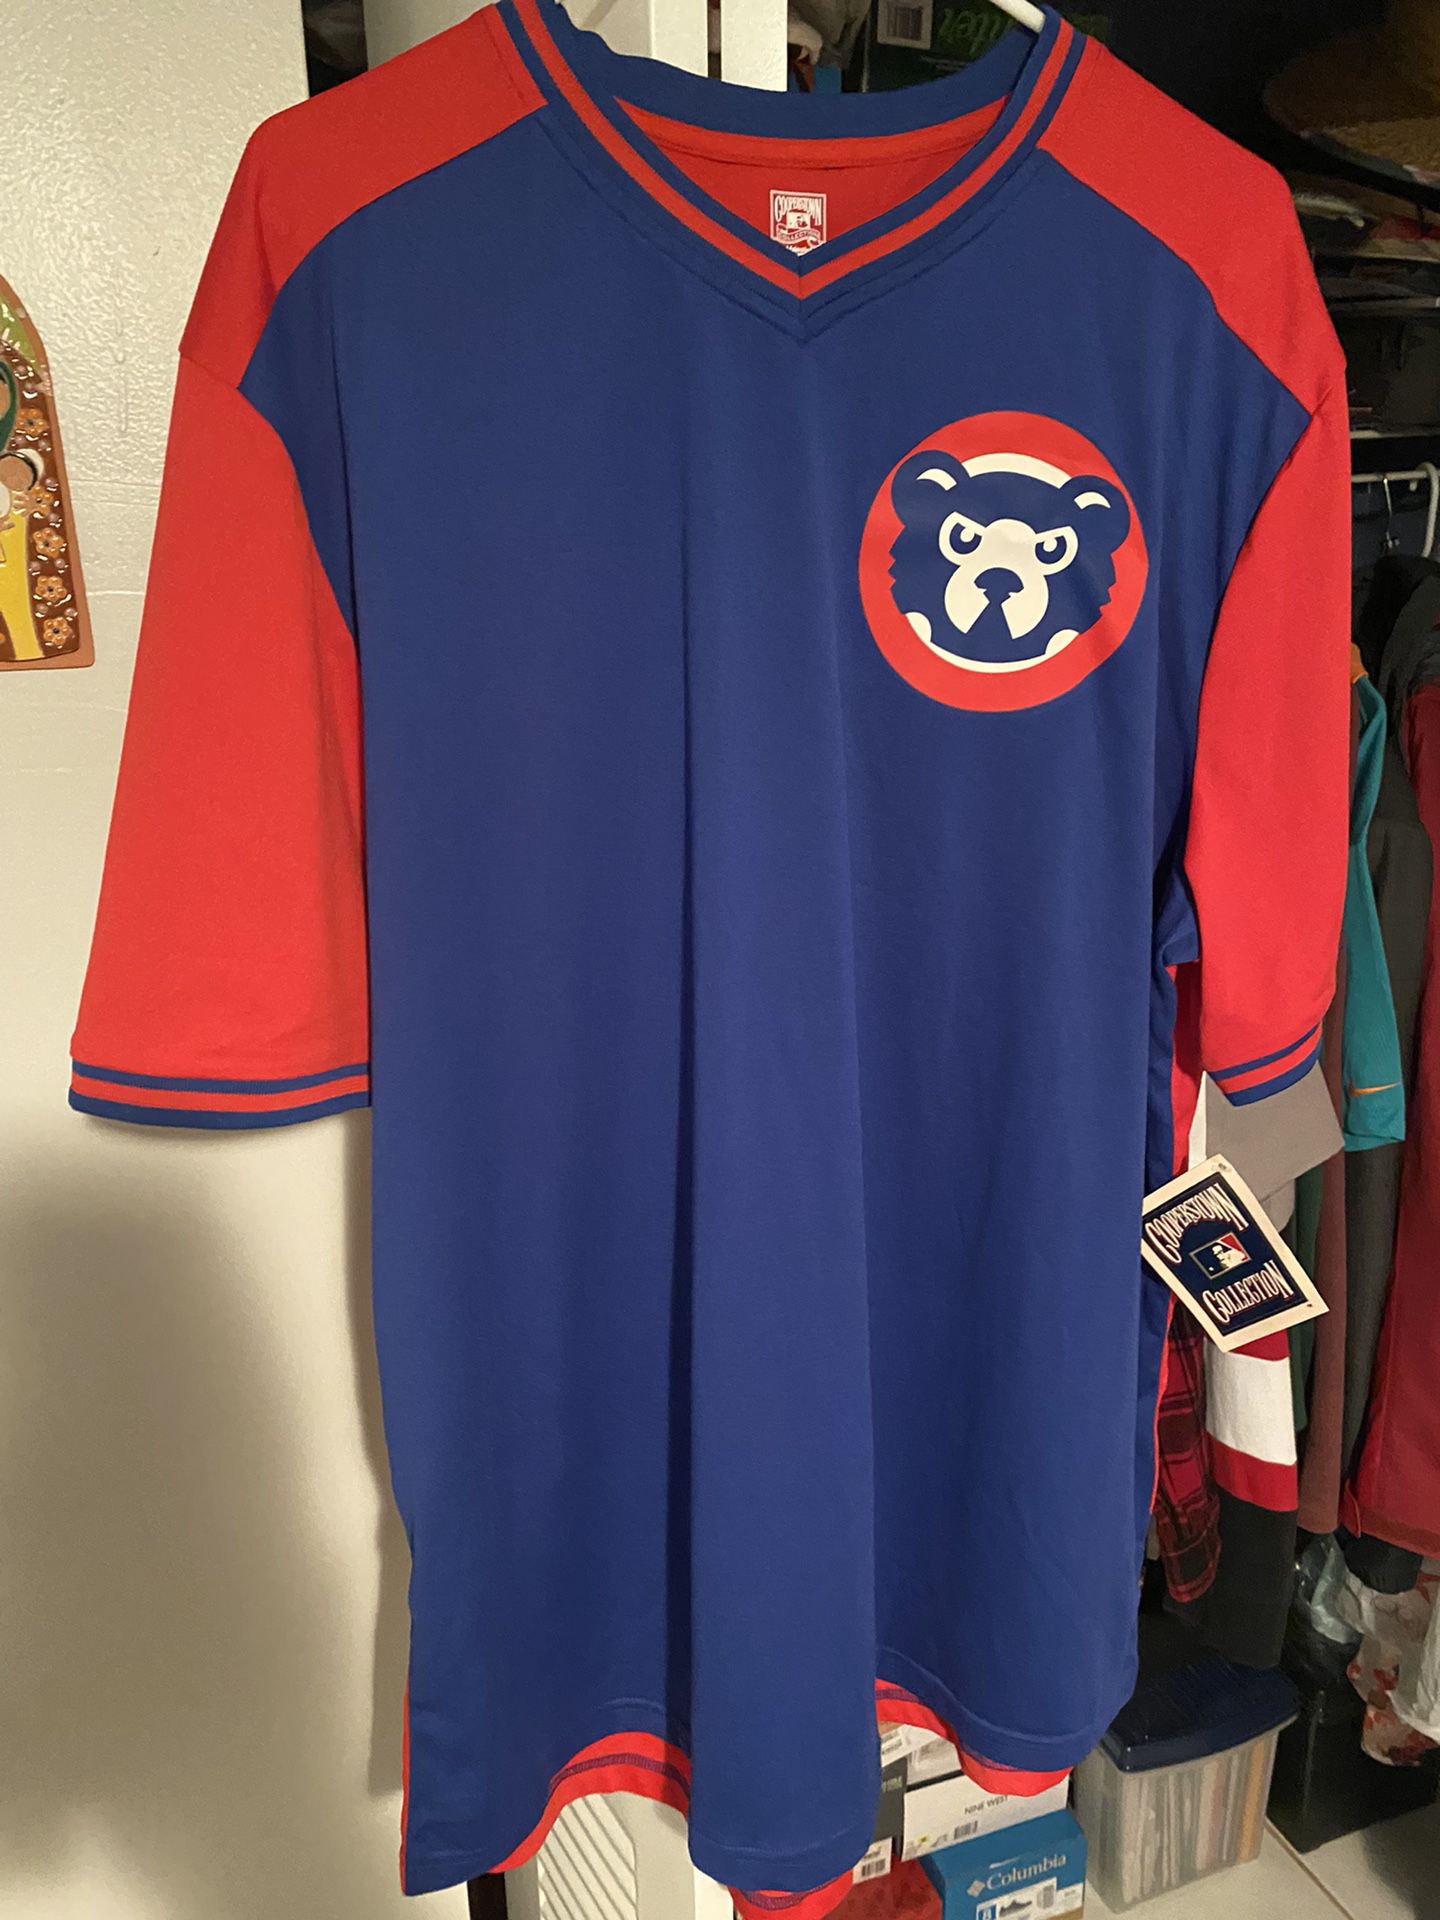 Cubs Jersey/shirt